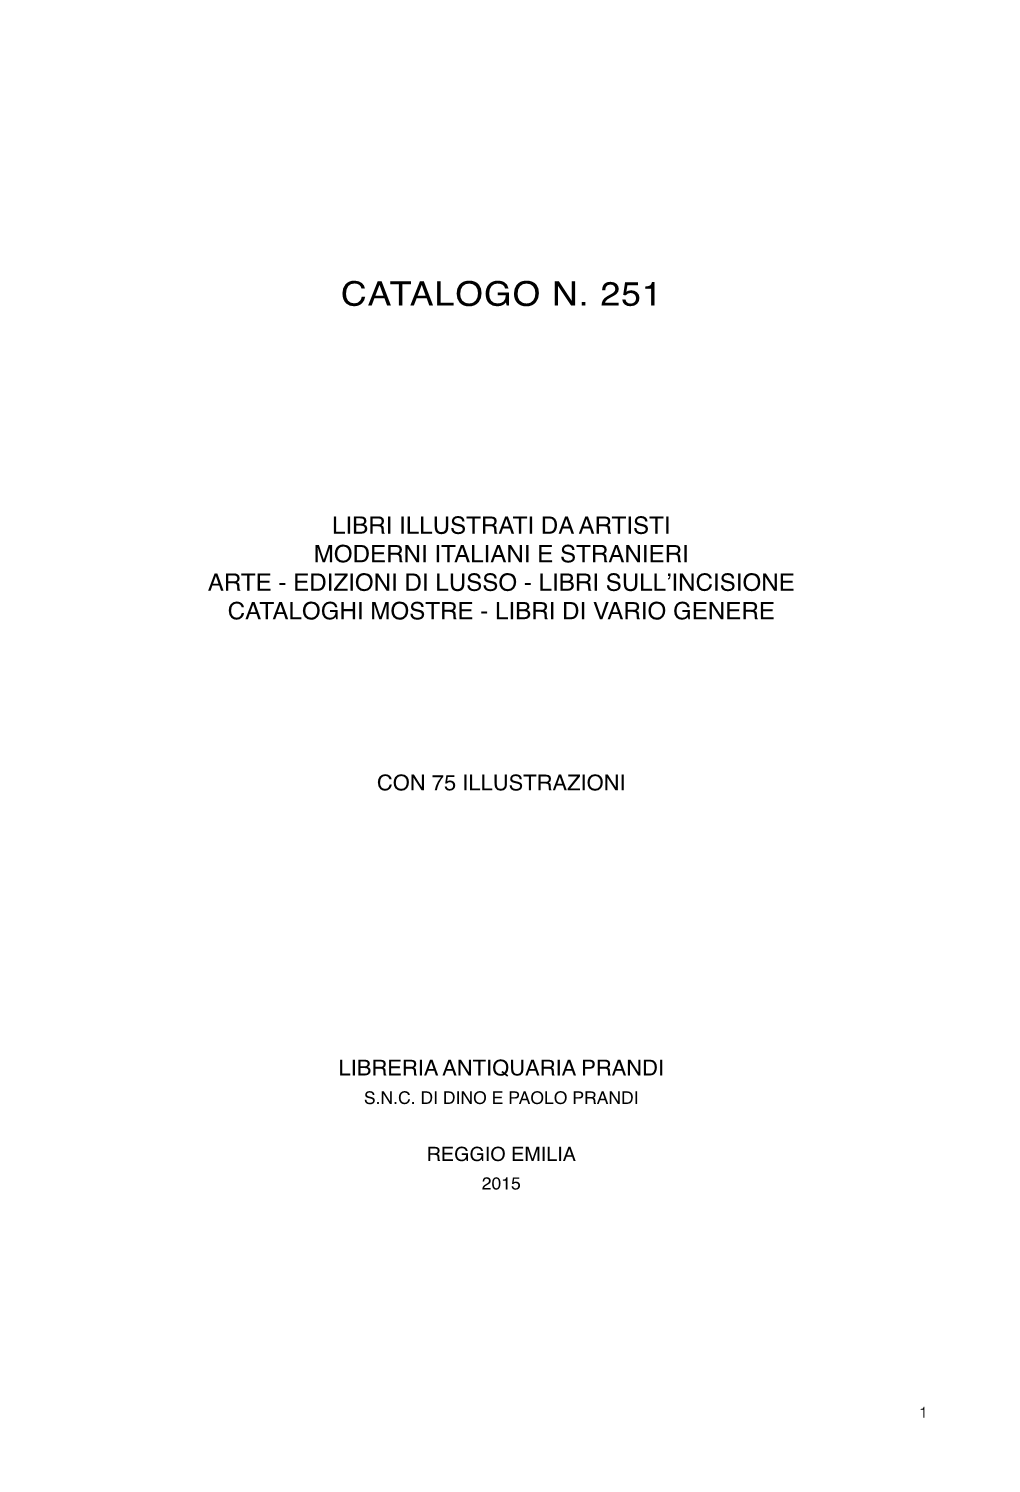 Catalogo N. 251